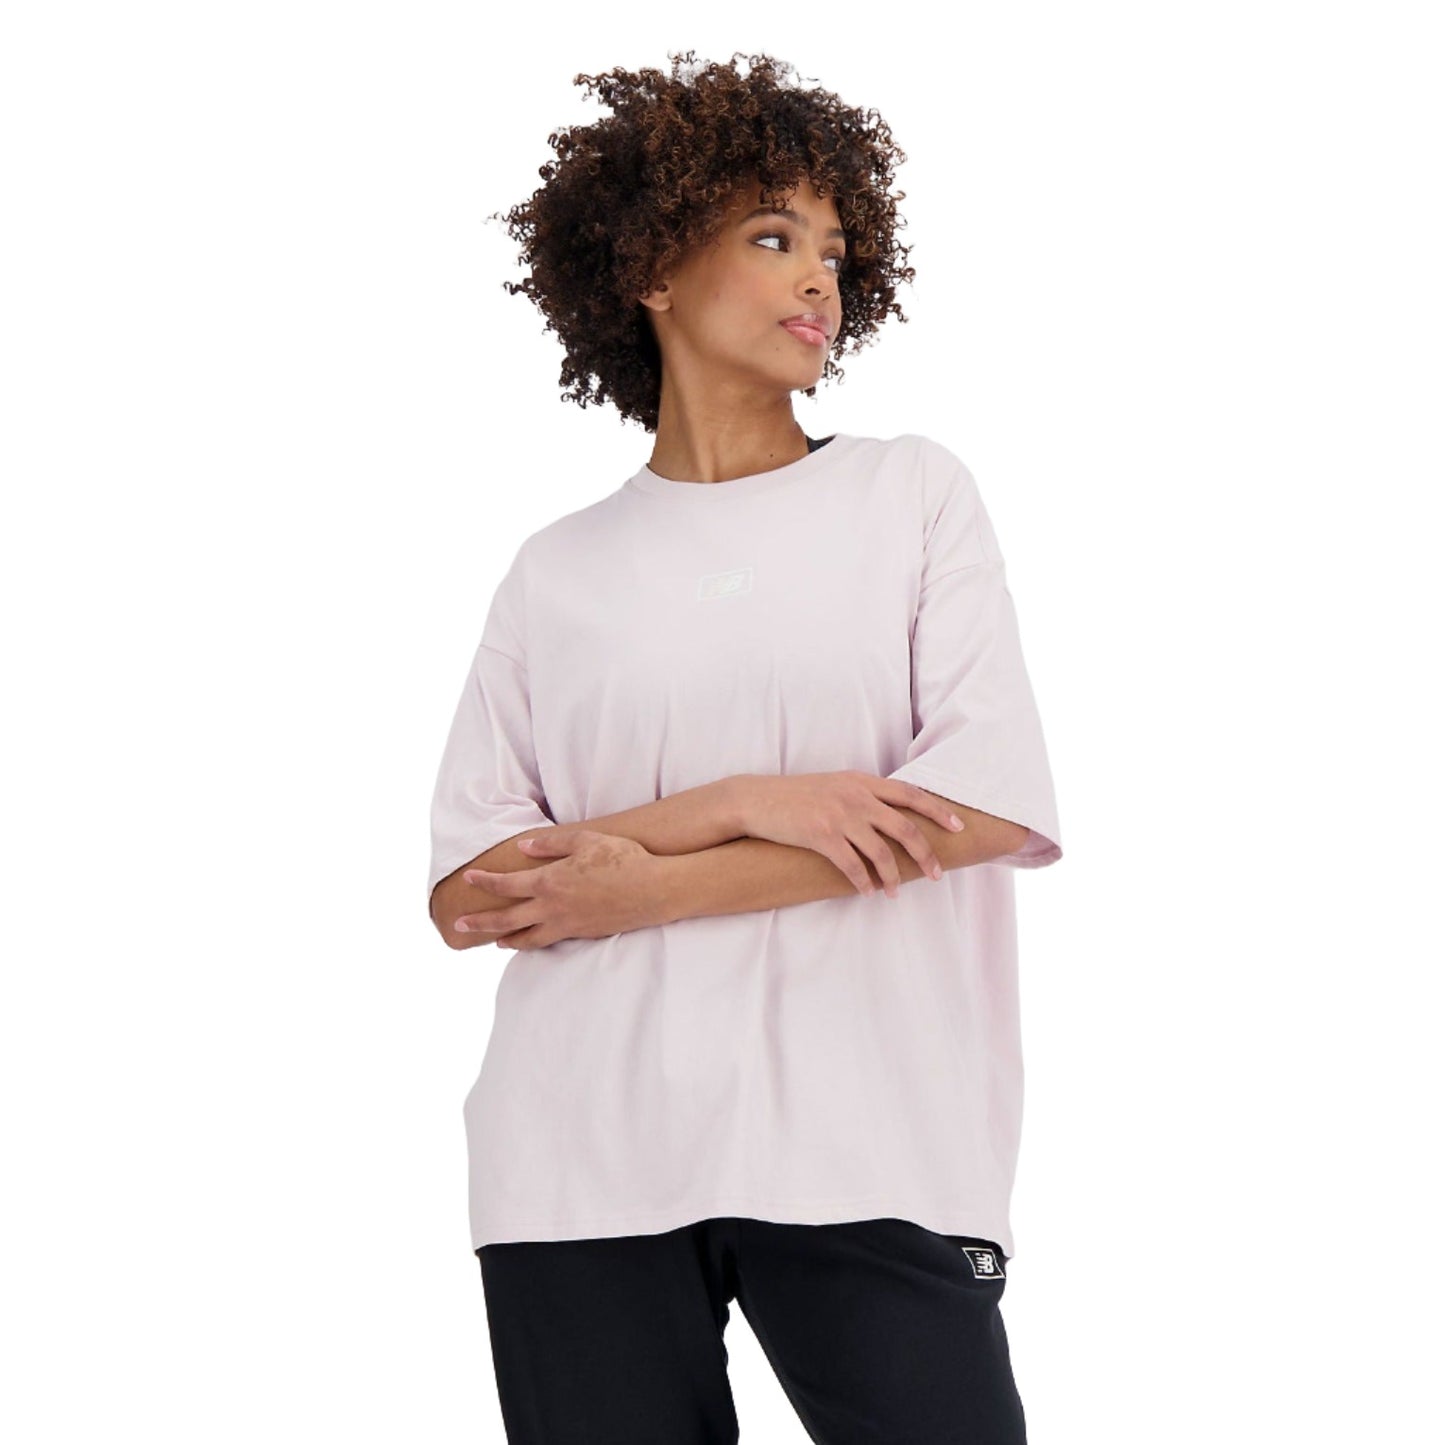 New Balance Essentials Graphic Cotton Jersey Oversized - Pink